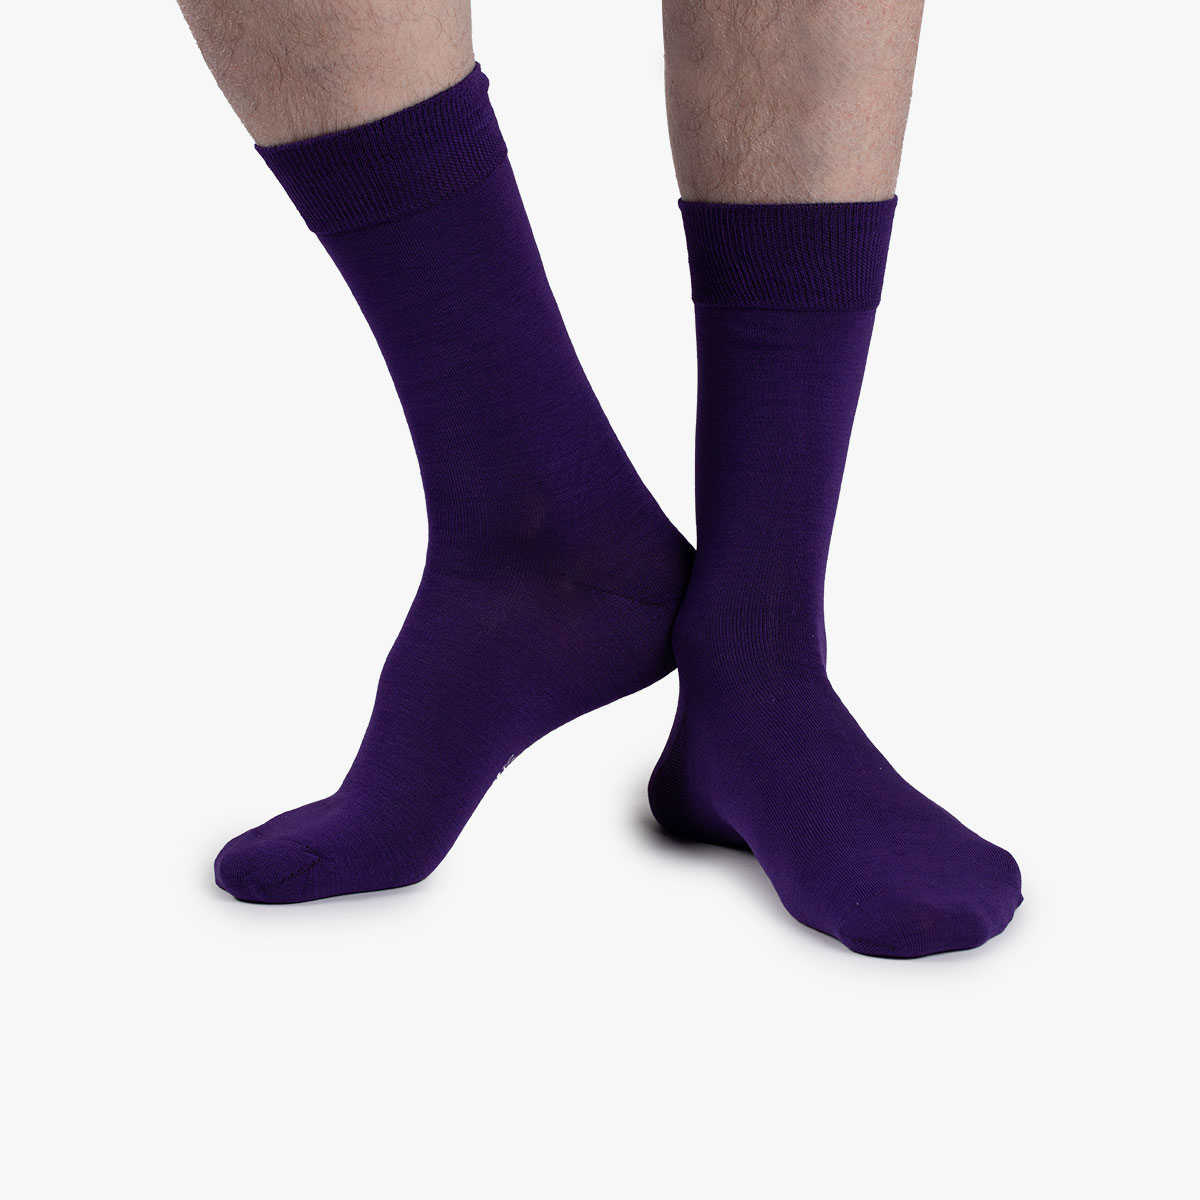 Socken in lila aus der Sockenbox am Fuß